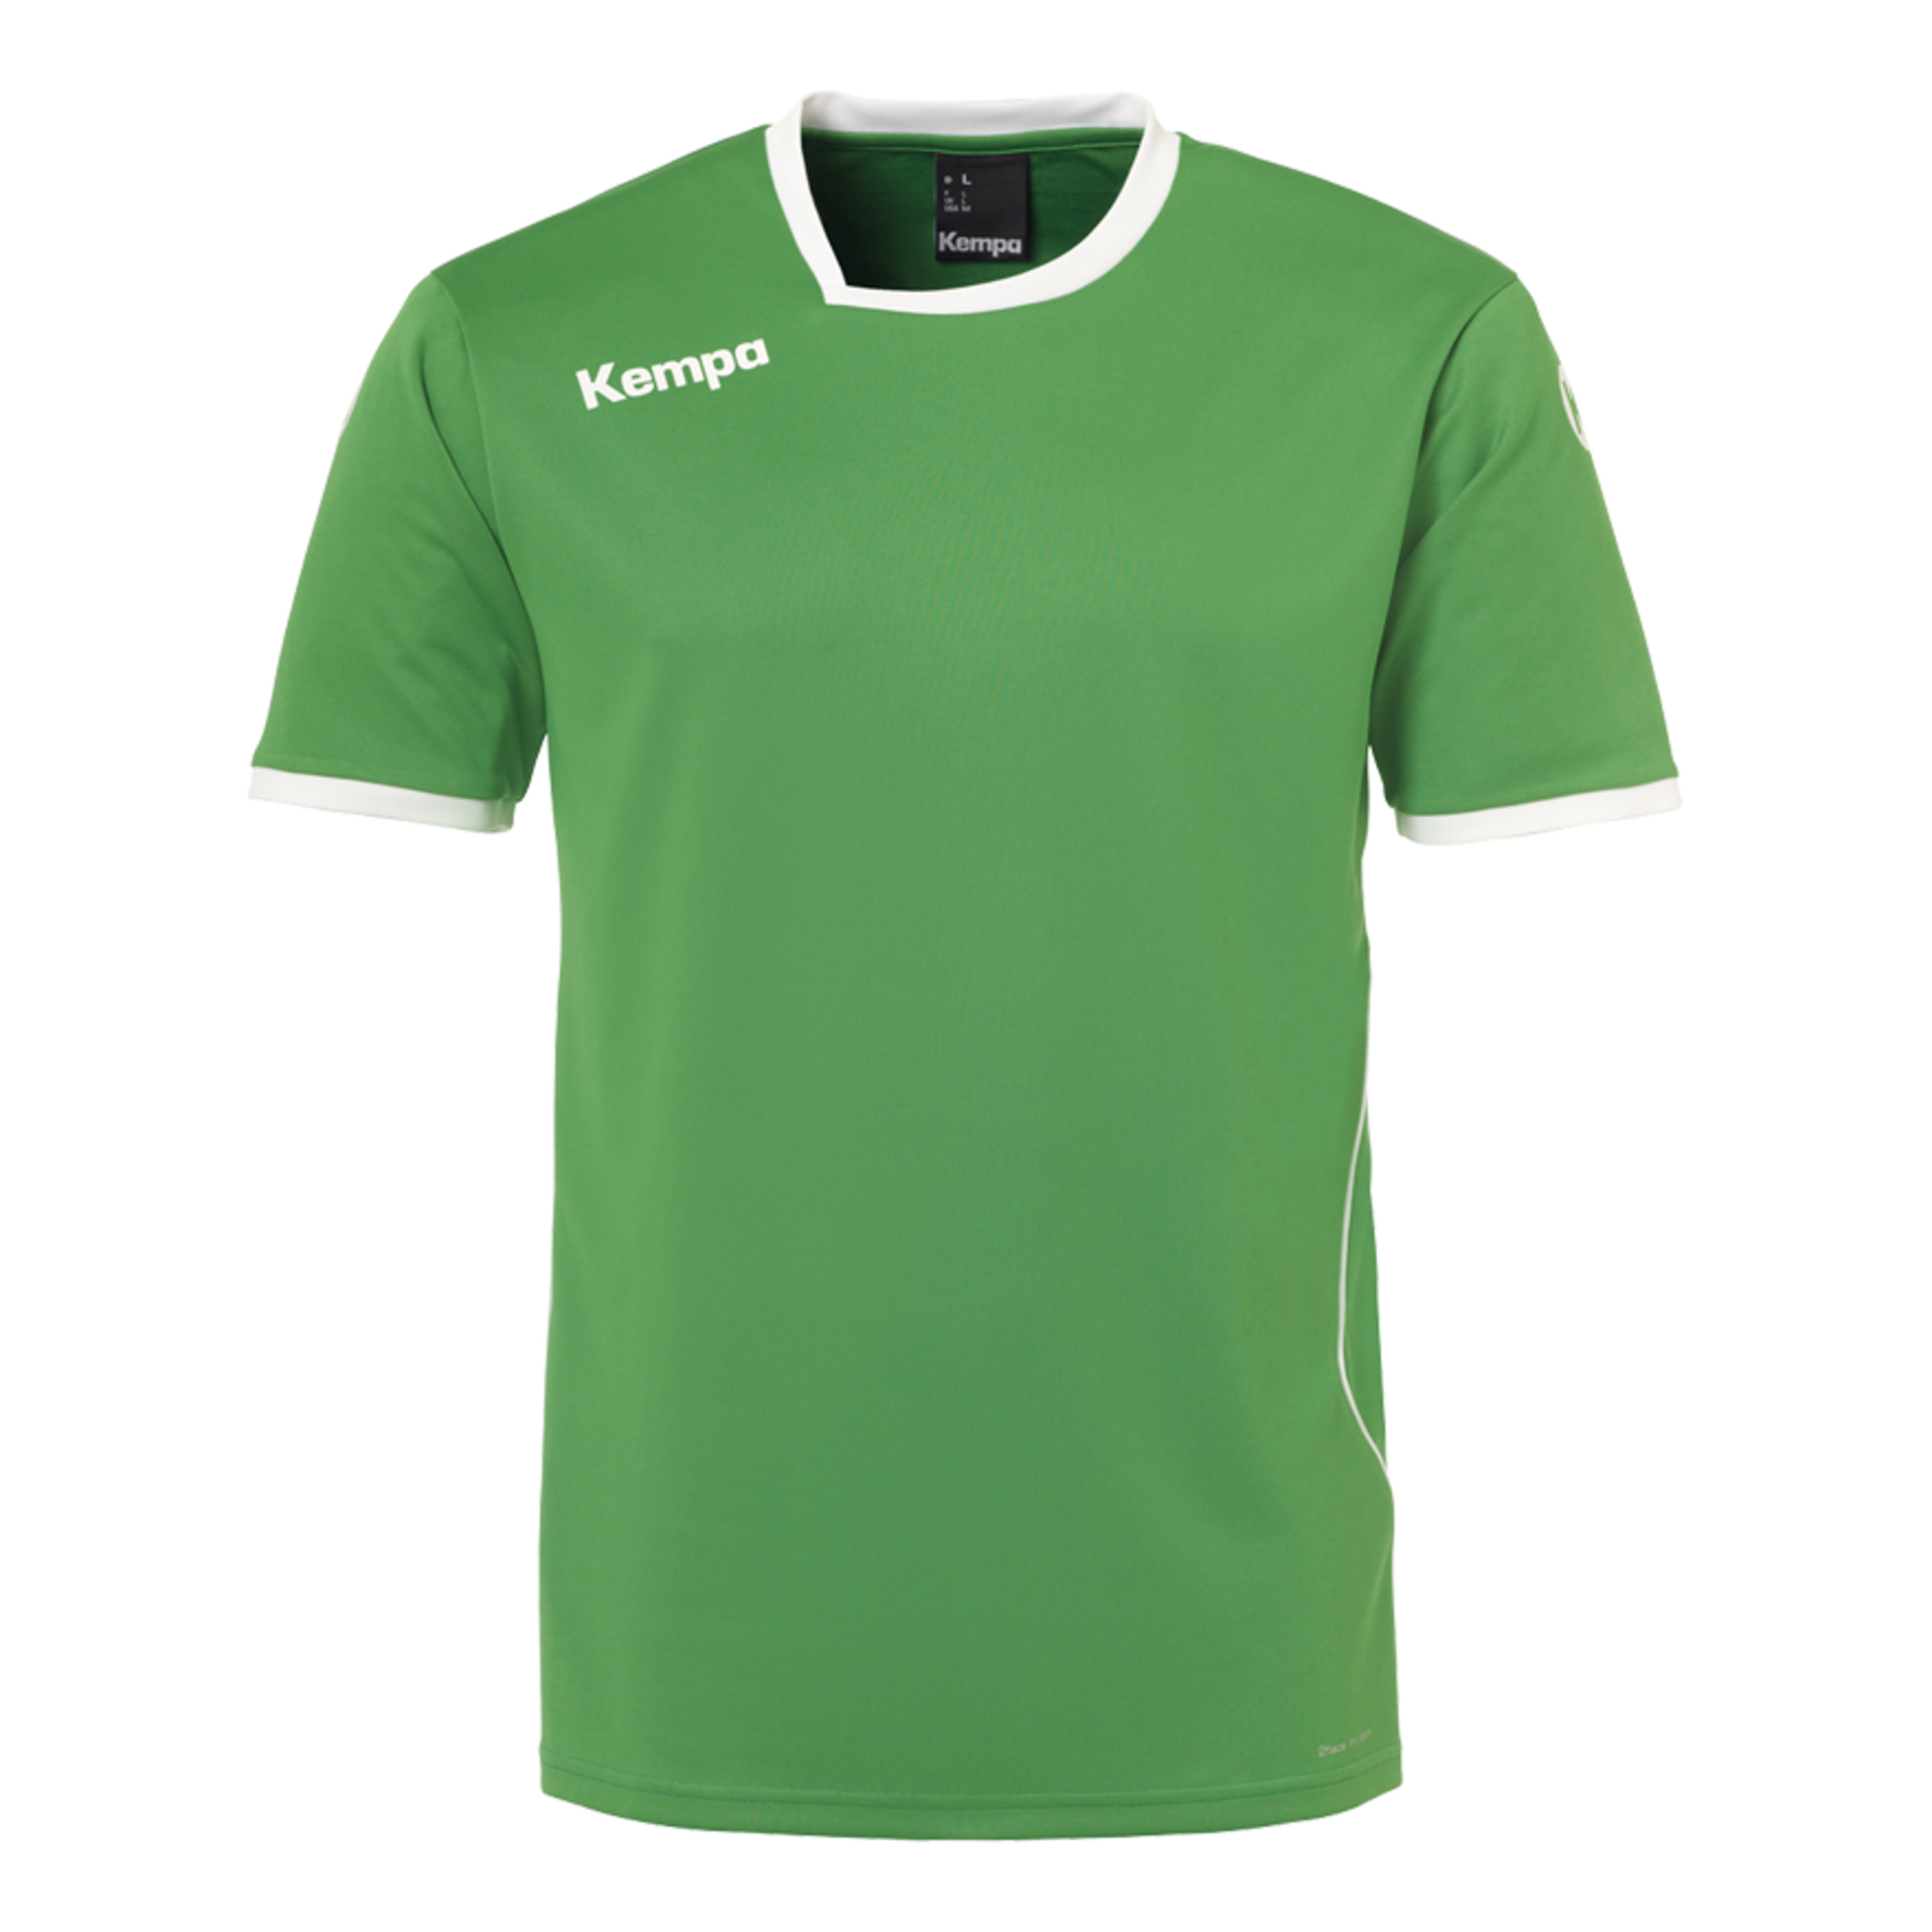 Curve Camiseta Verde/blanco Kempa - verde - 